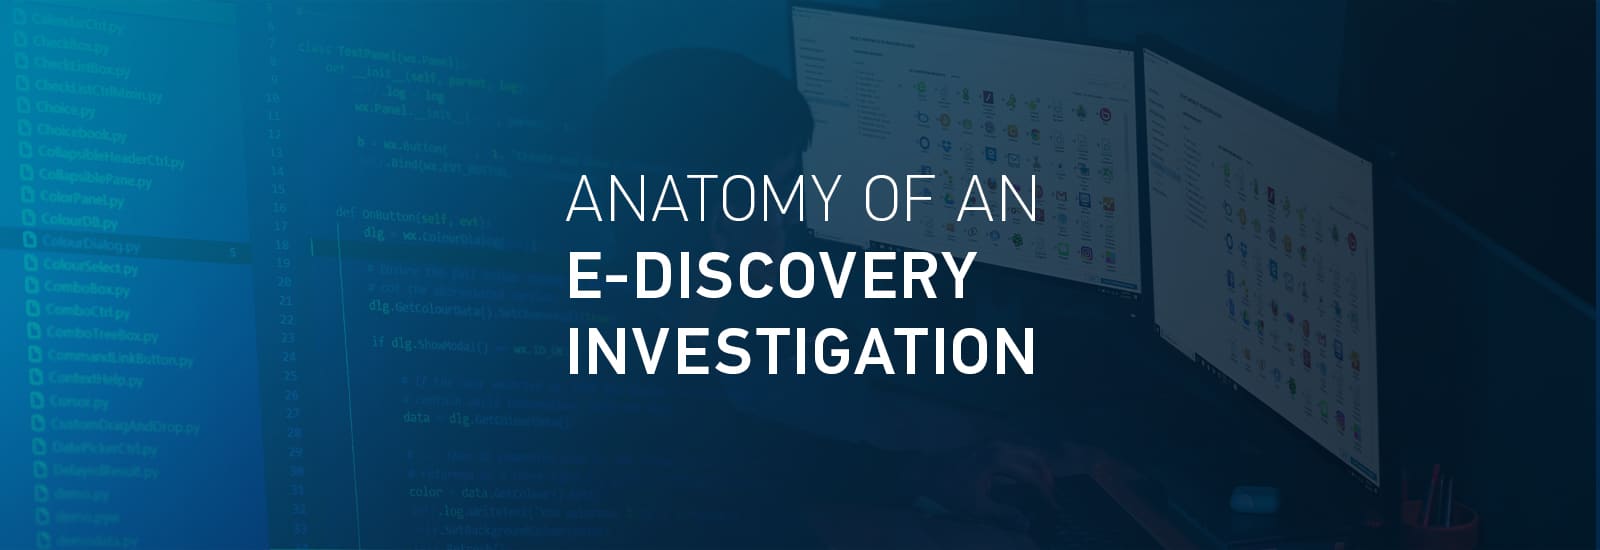 Anatomy of eDiscovery blog header image